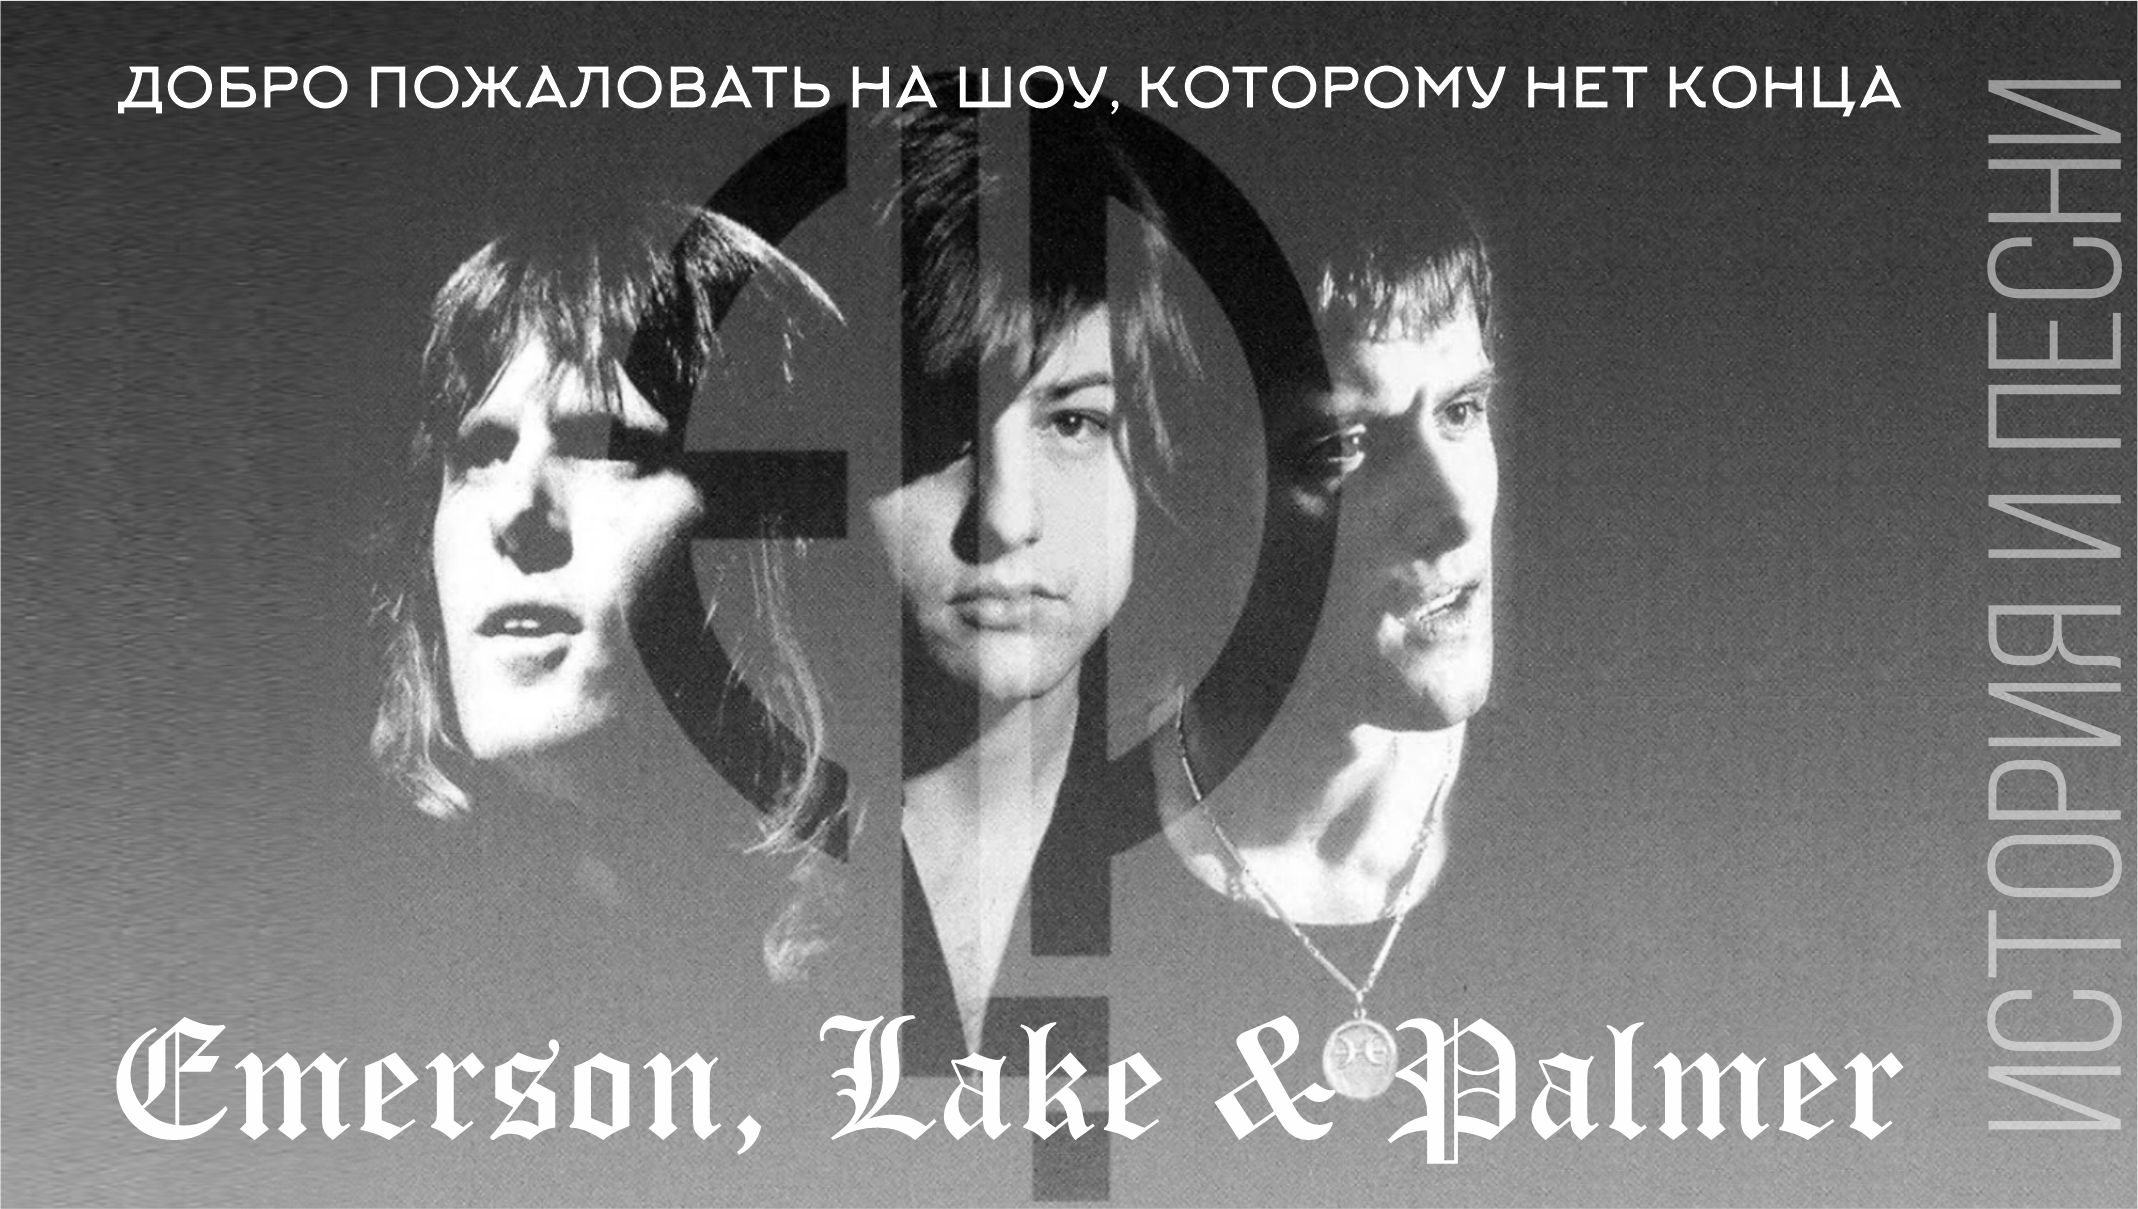 Emerson Lake and Palmer 1970 album